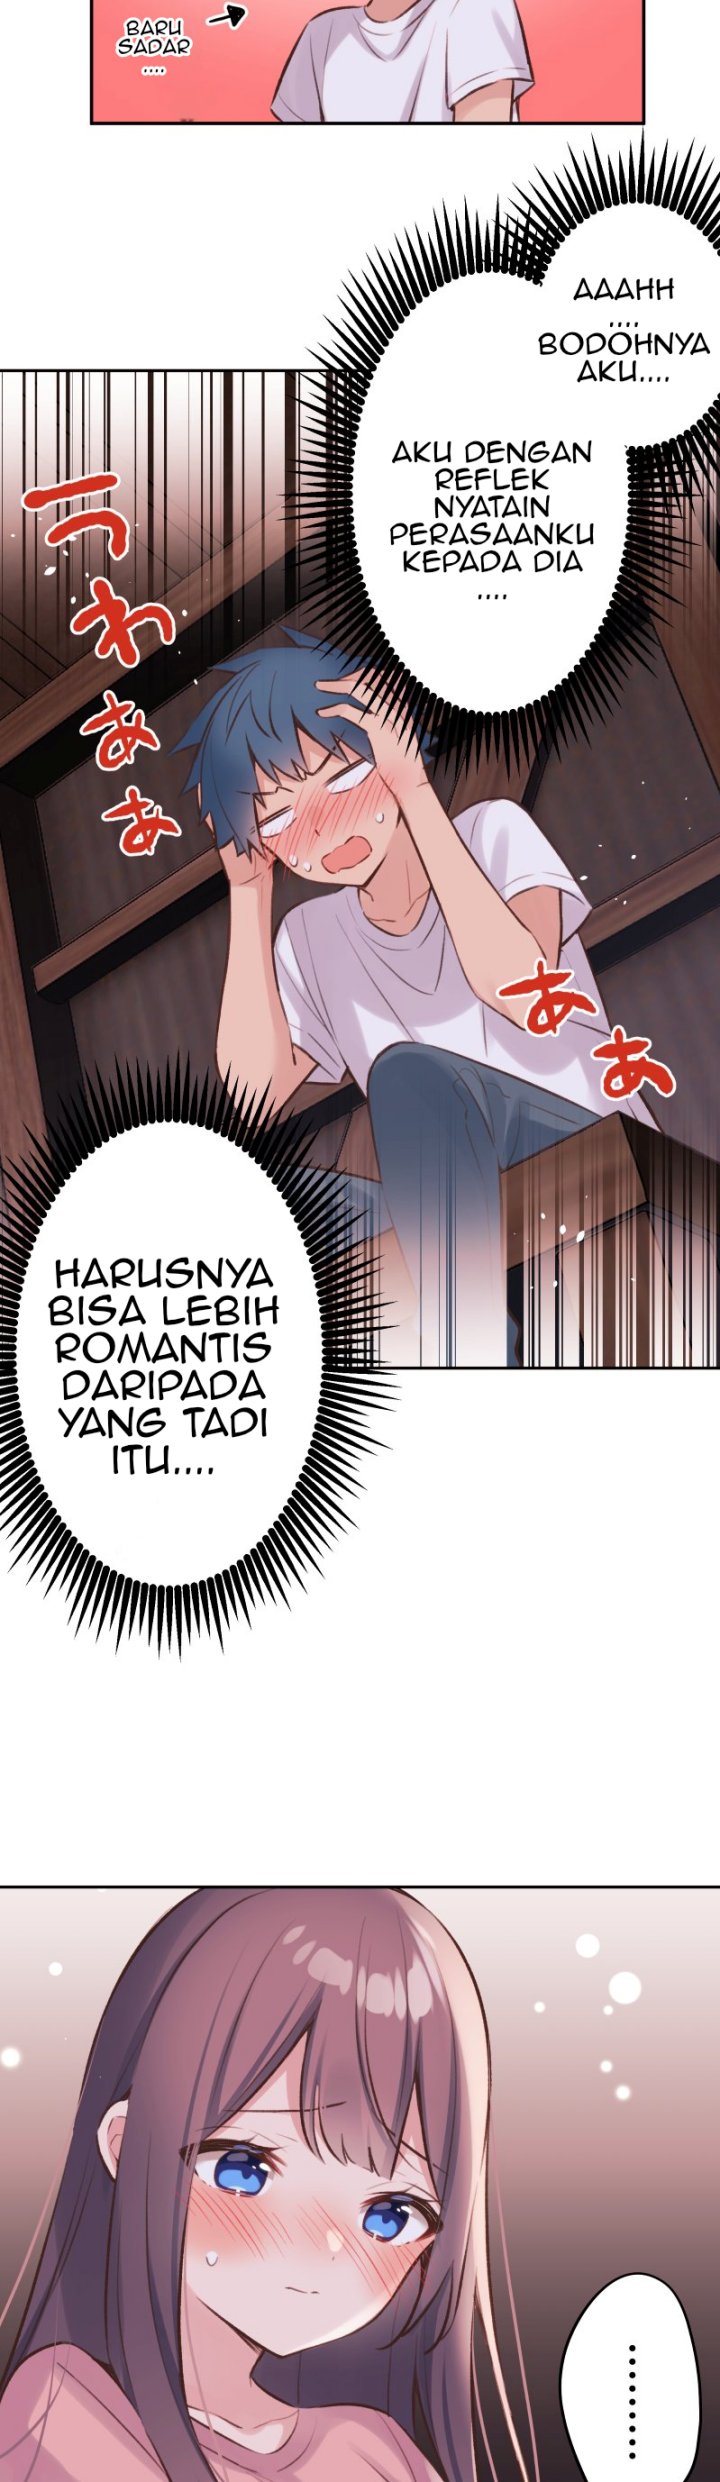 Waka-chan Is Flirty Again Chapter 88